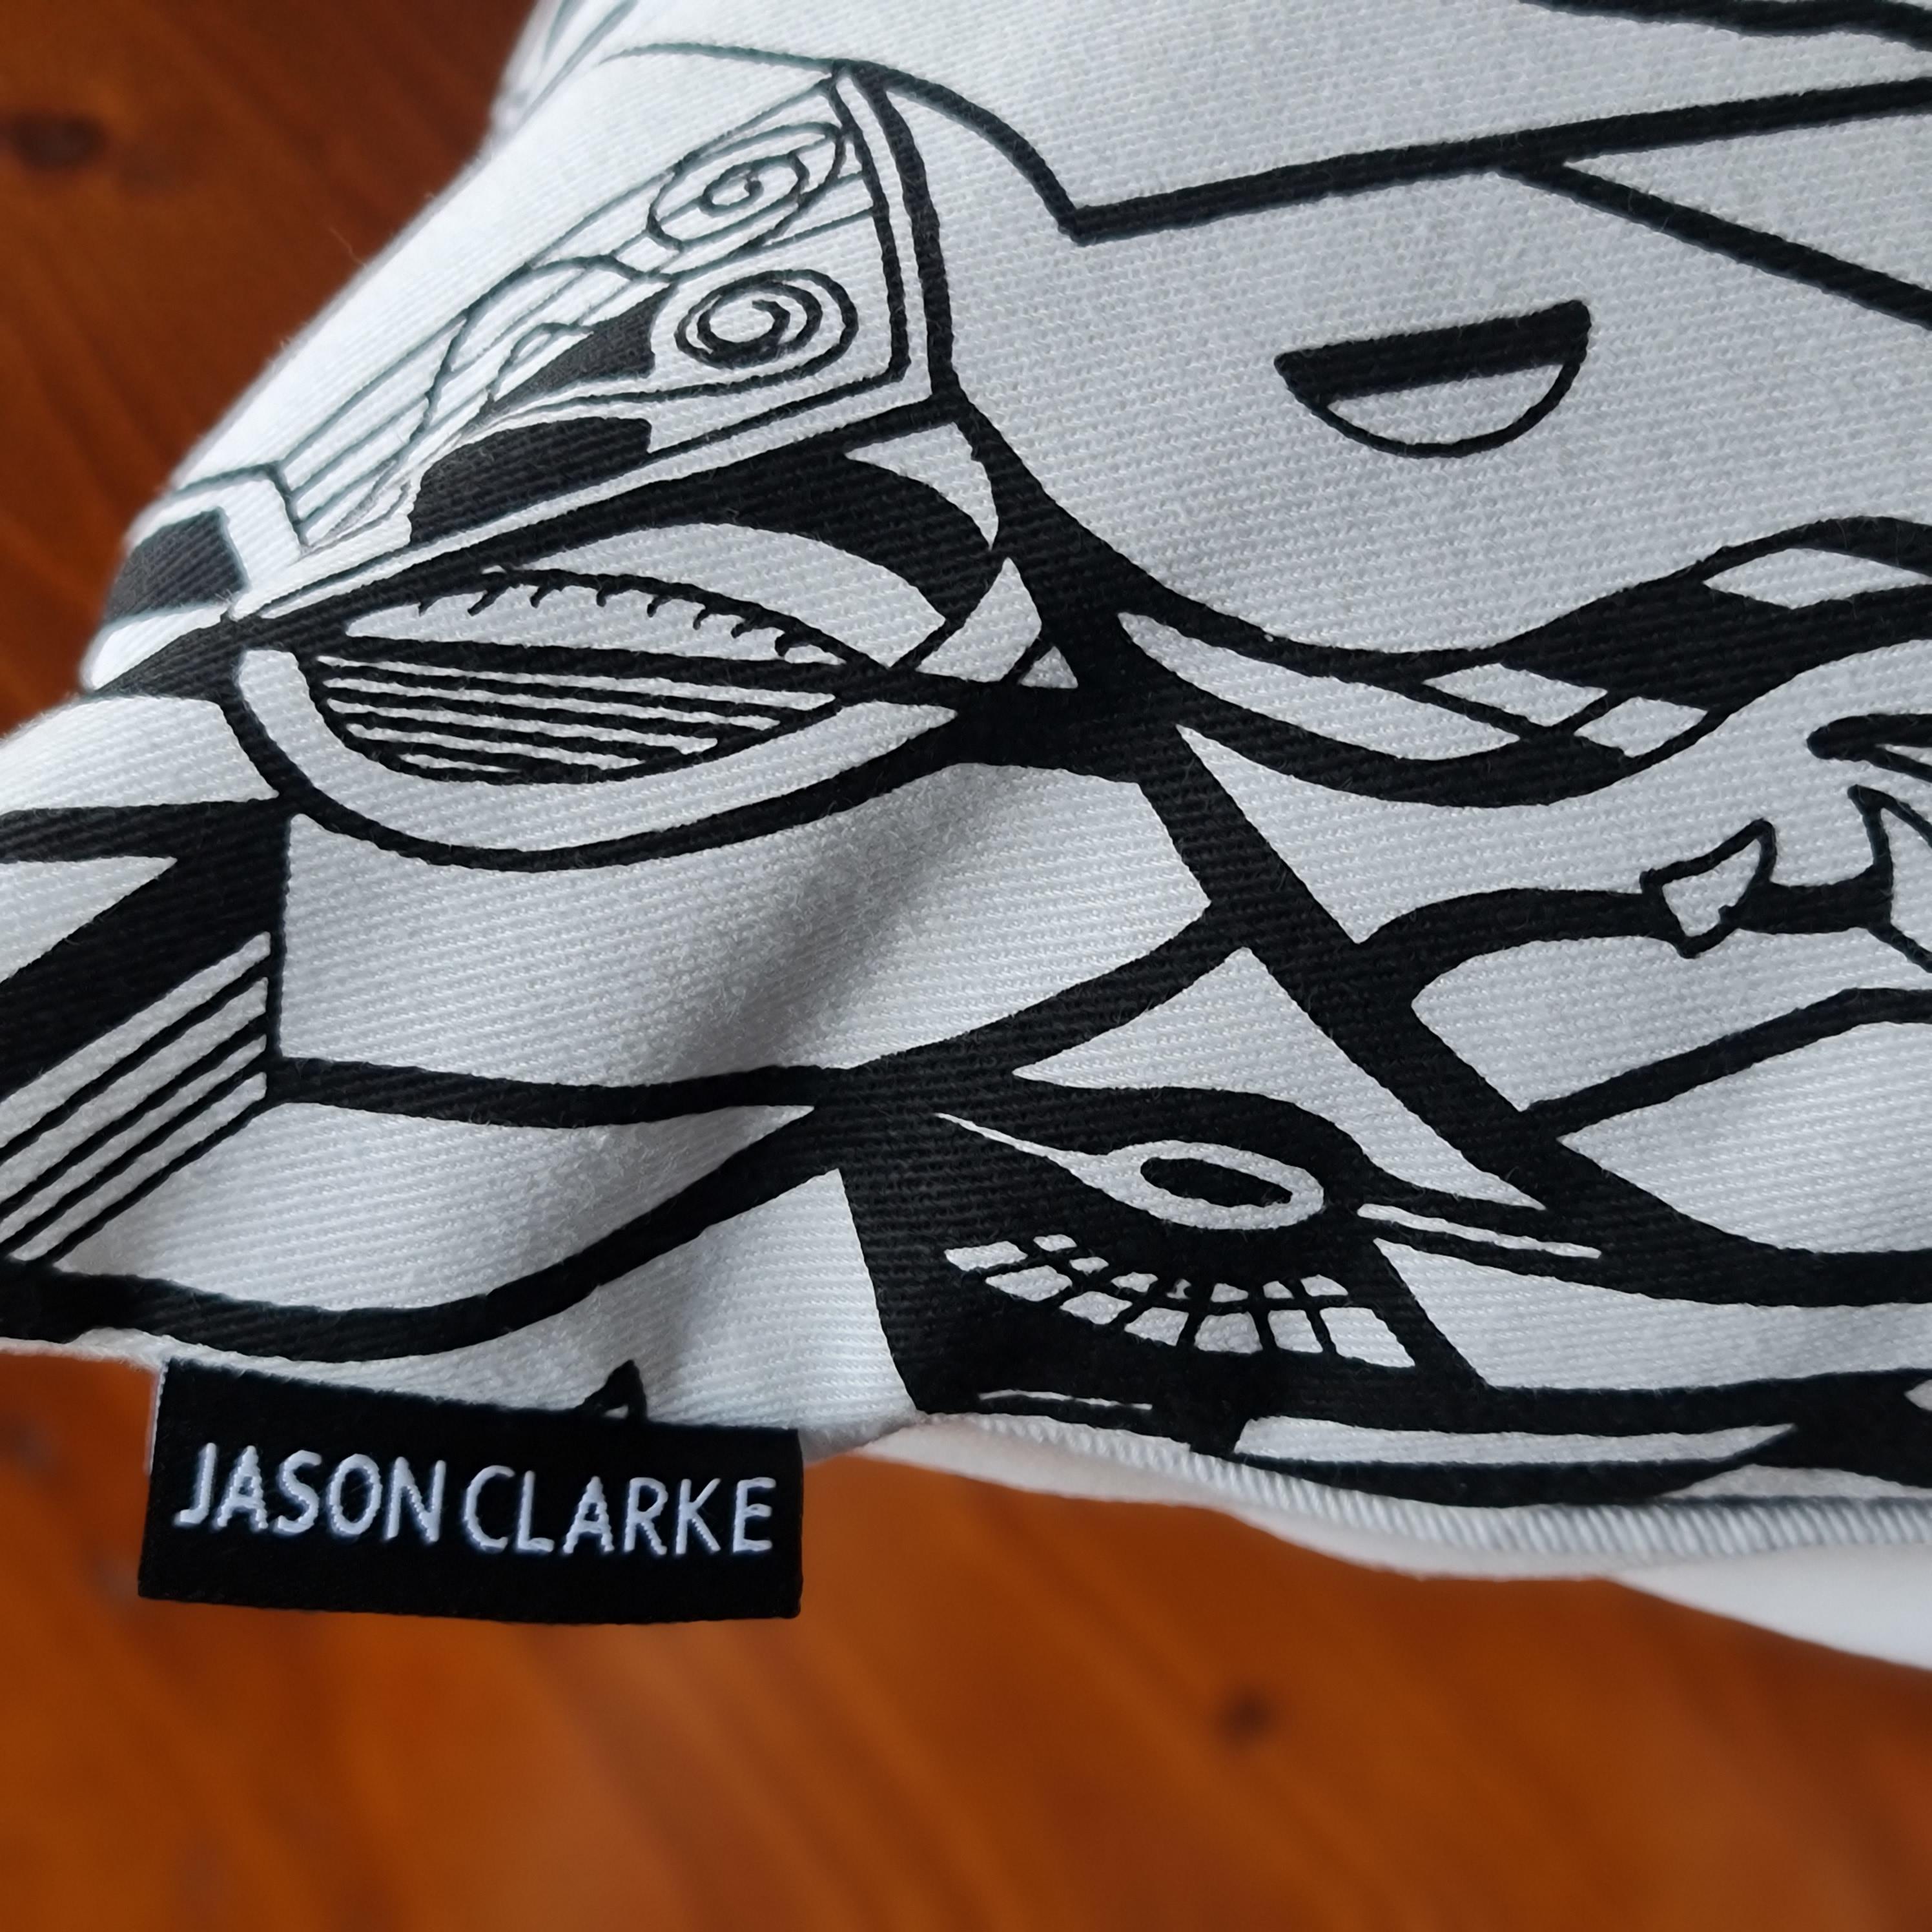 Product tag for Jason Clarke cushion